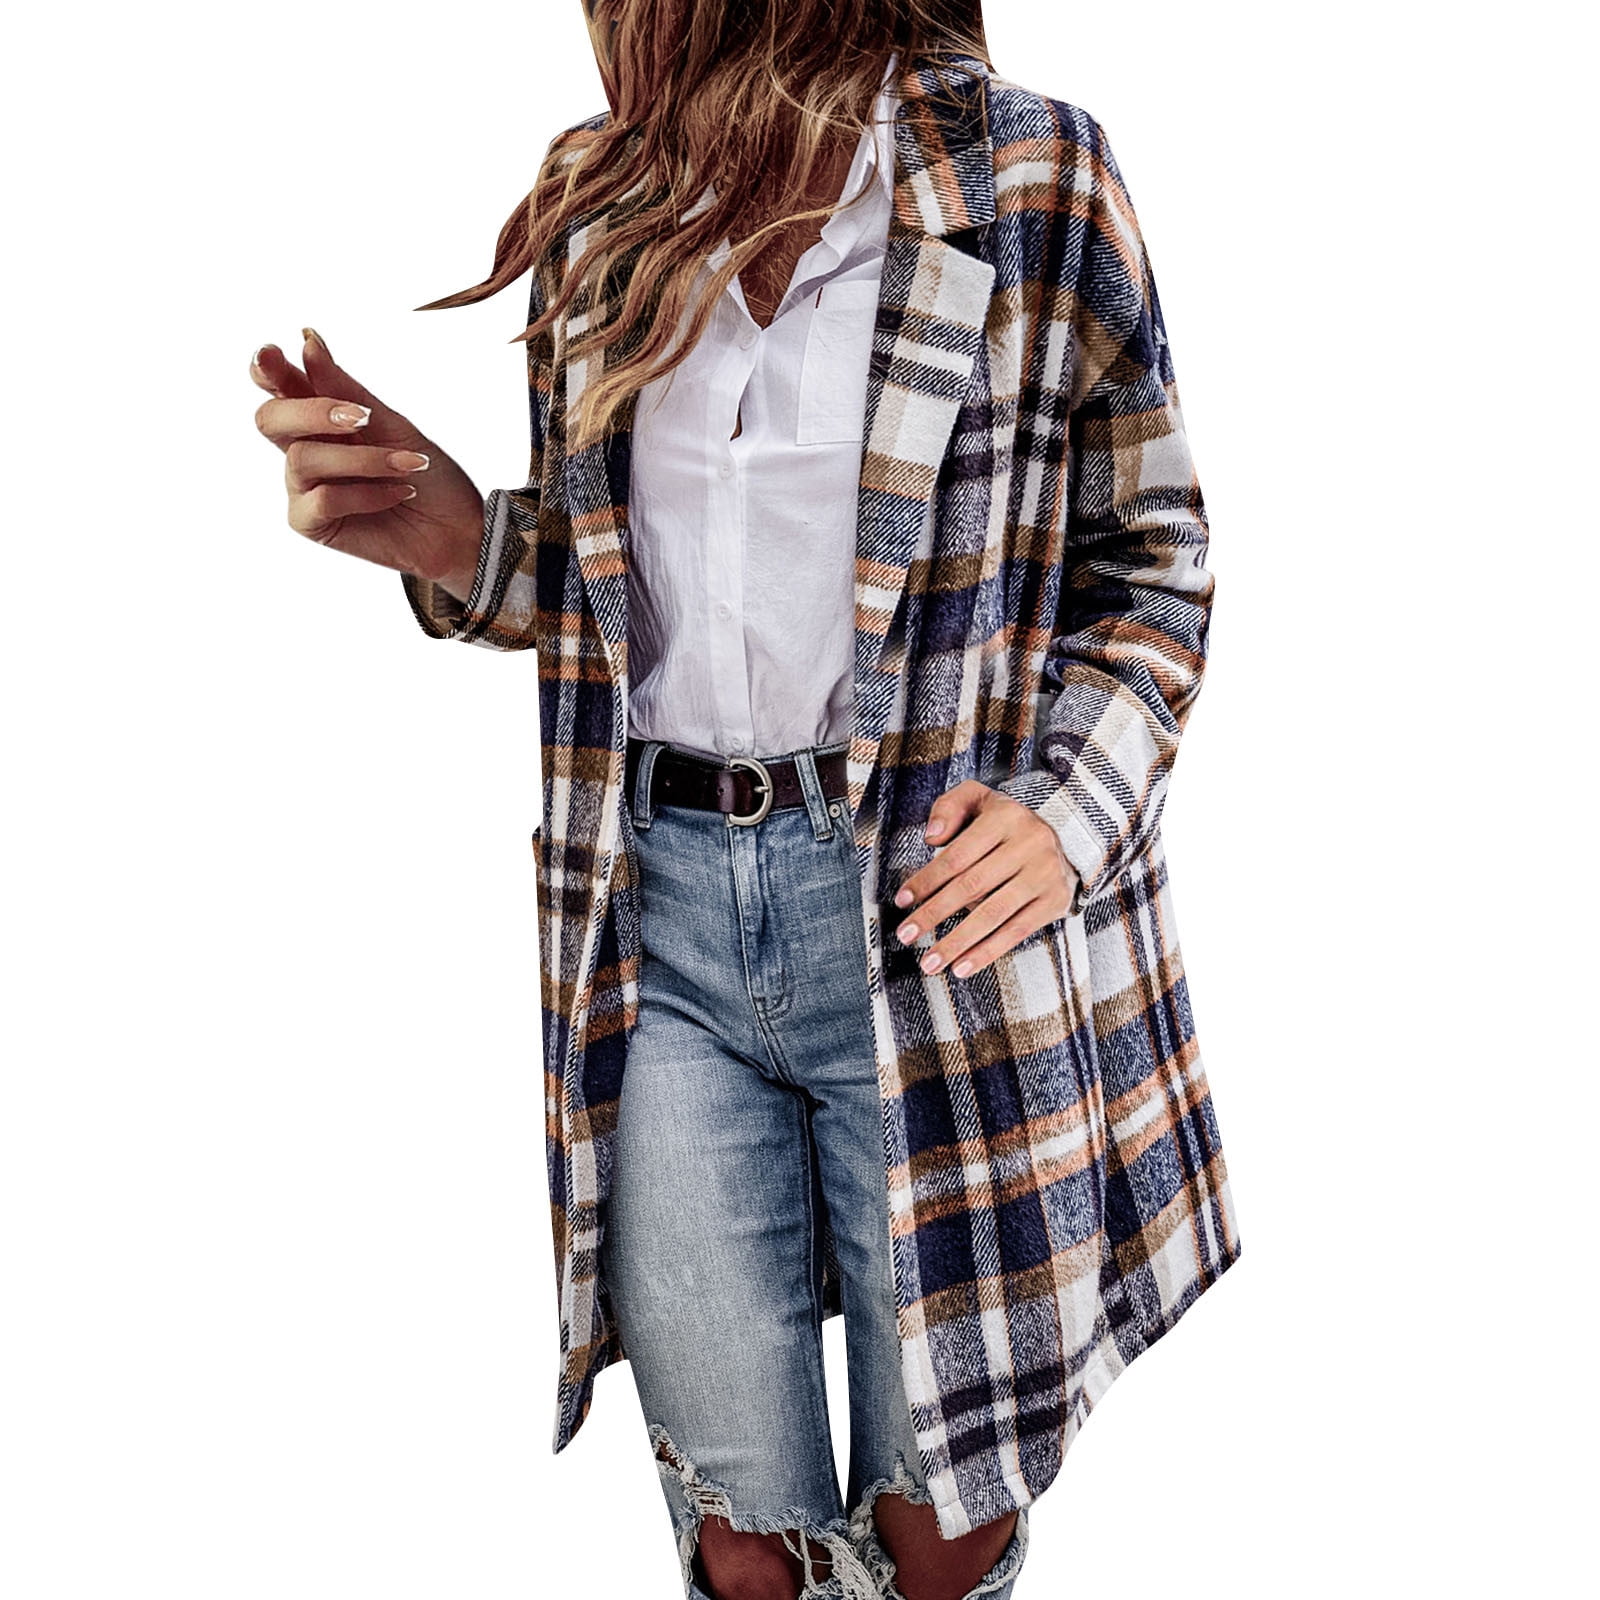 Canrulo Womens Casual Plaid Shacket Jacket Coat Winter Loose Oversize  Shirts Coffee S 